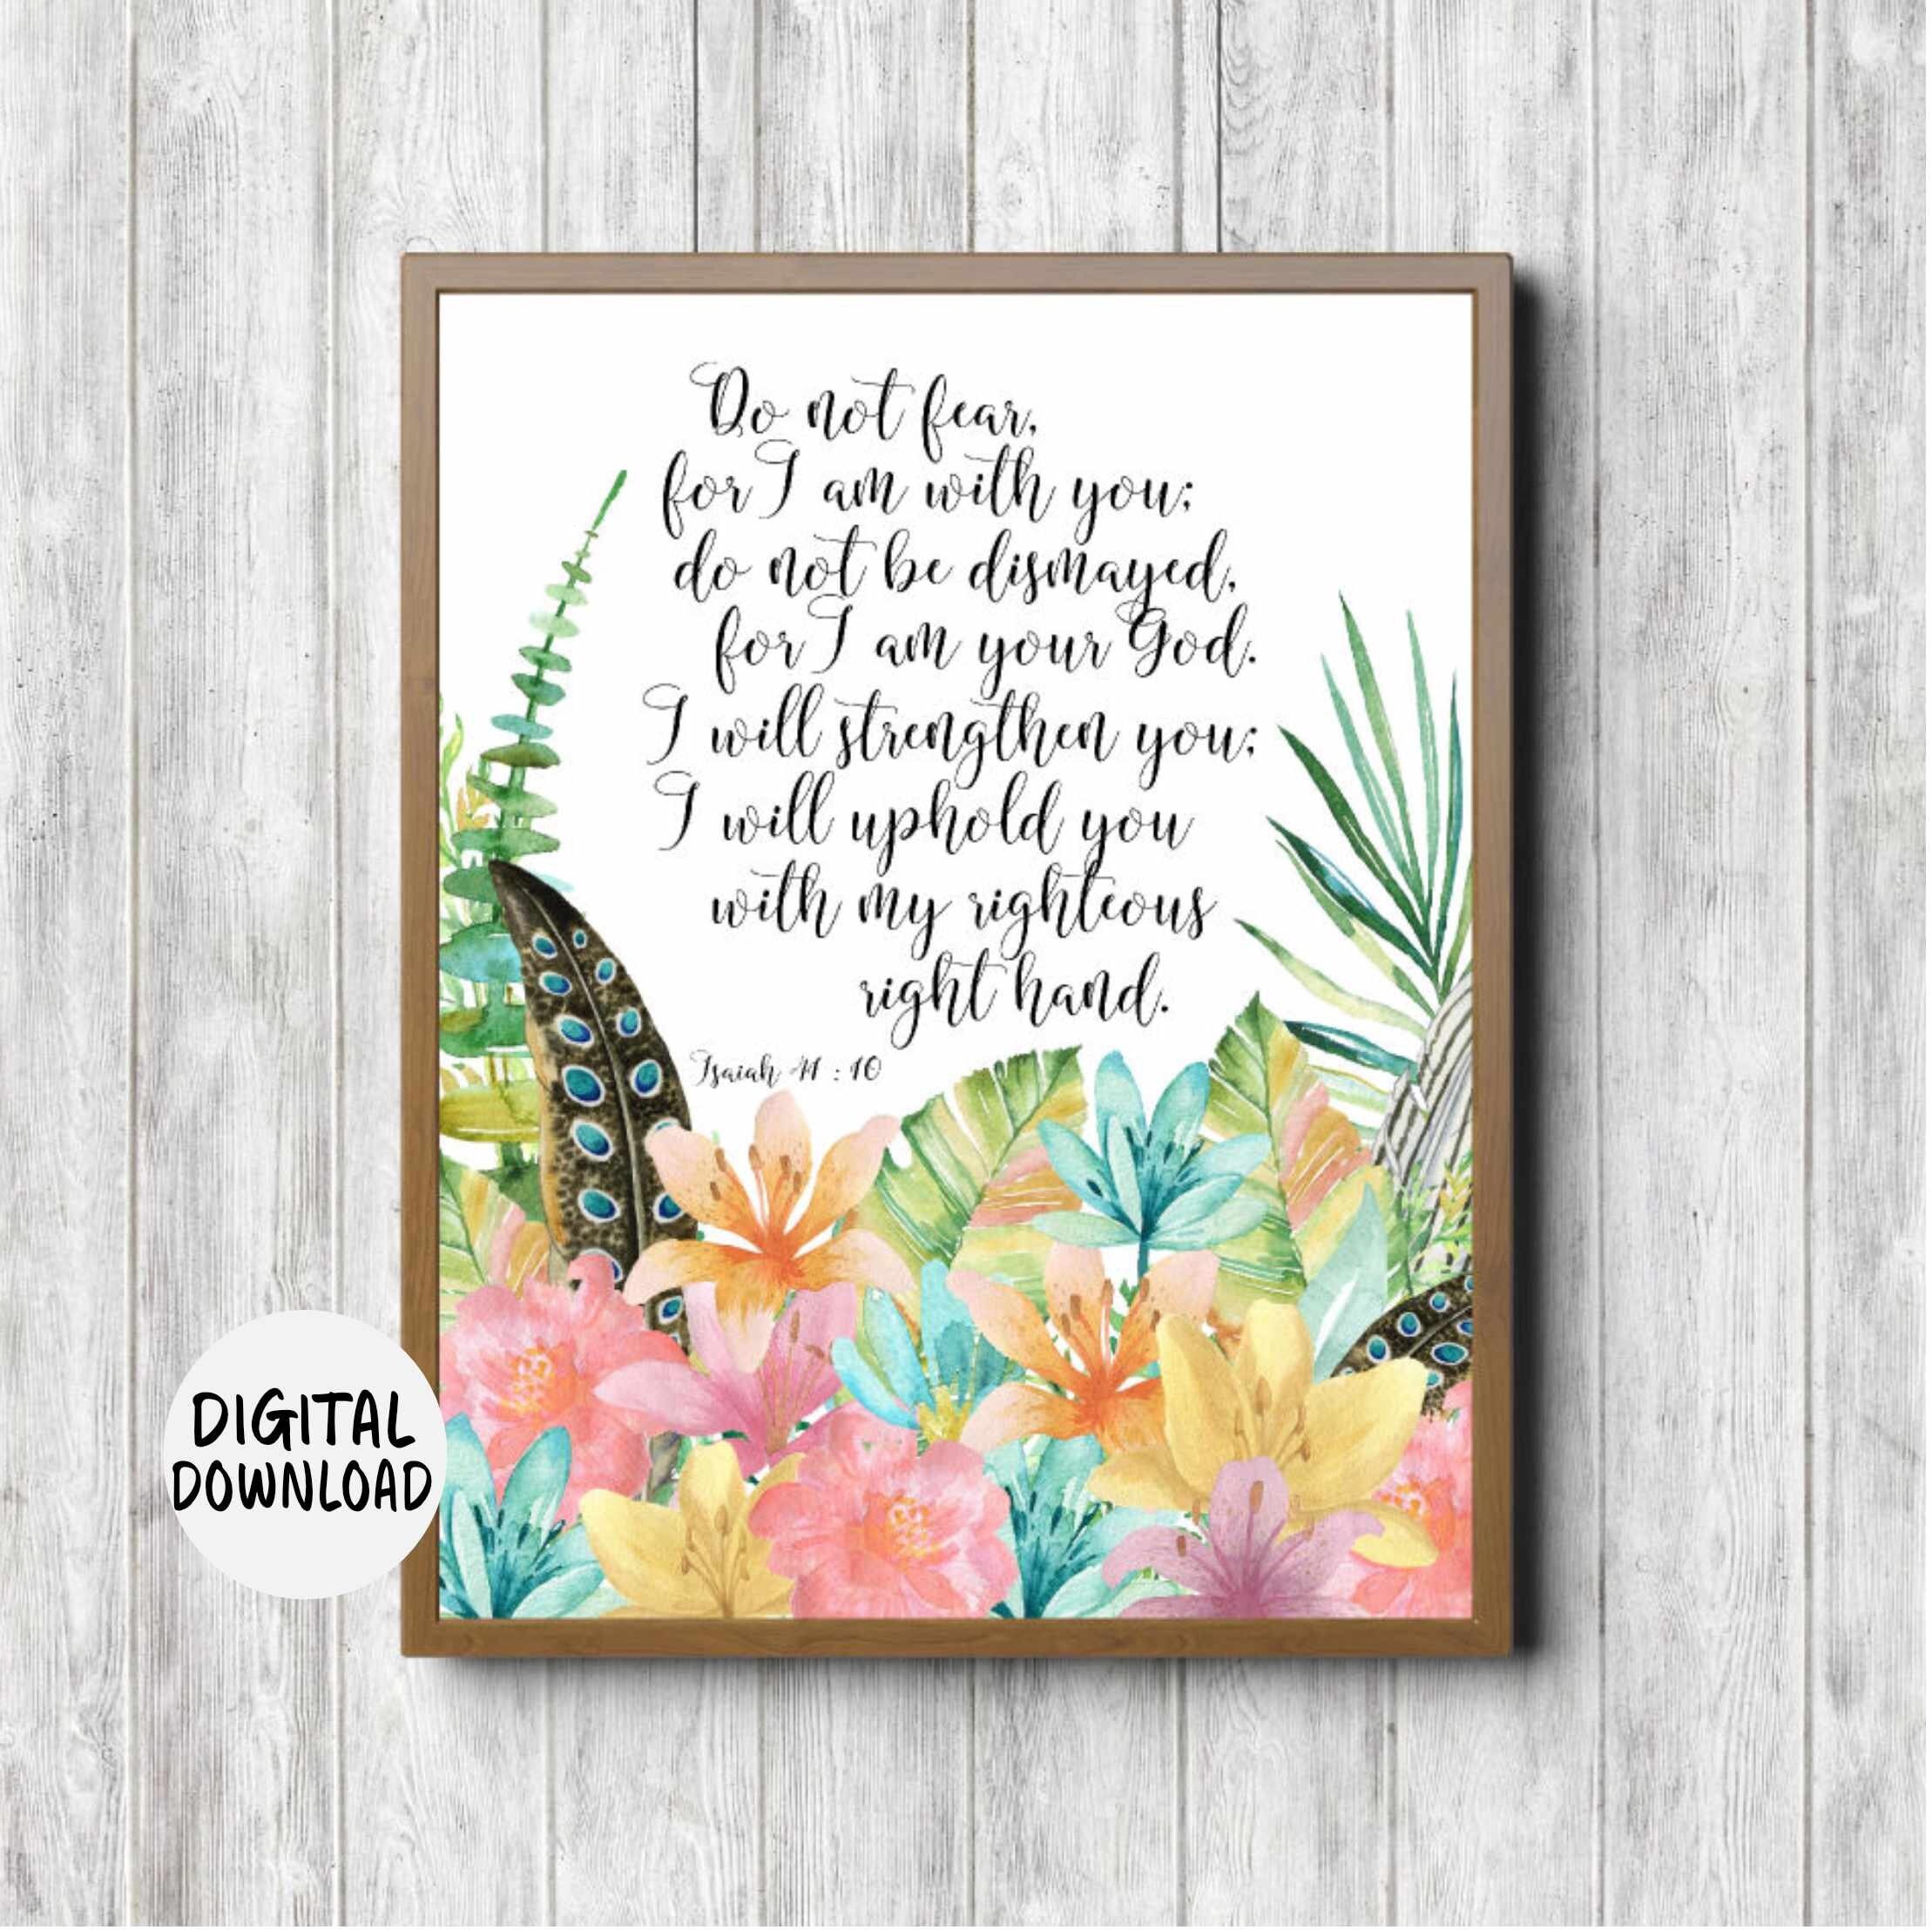 Isaiah 41:10 With Floral Watercolour Border Wall Art Print